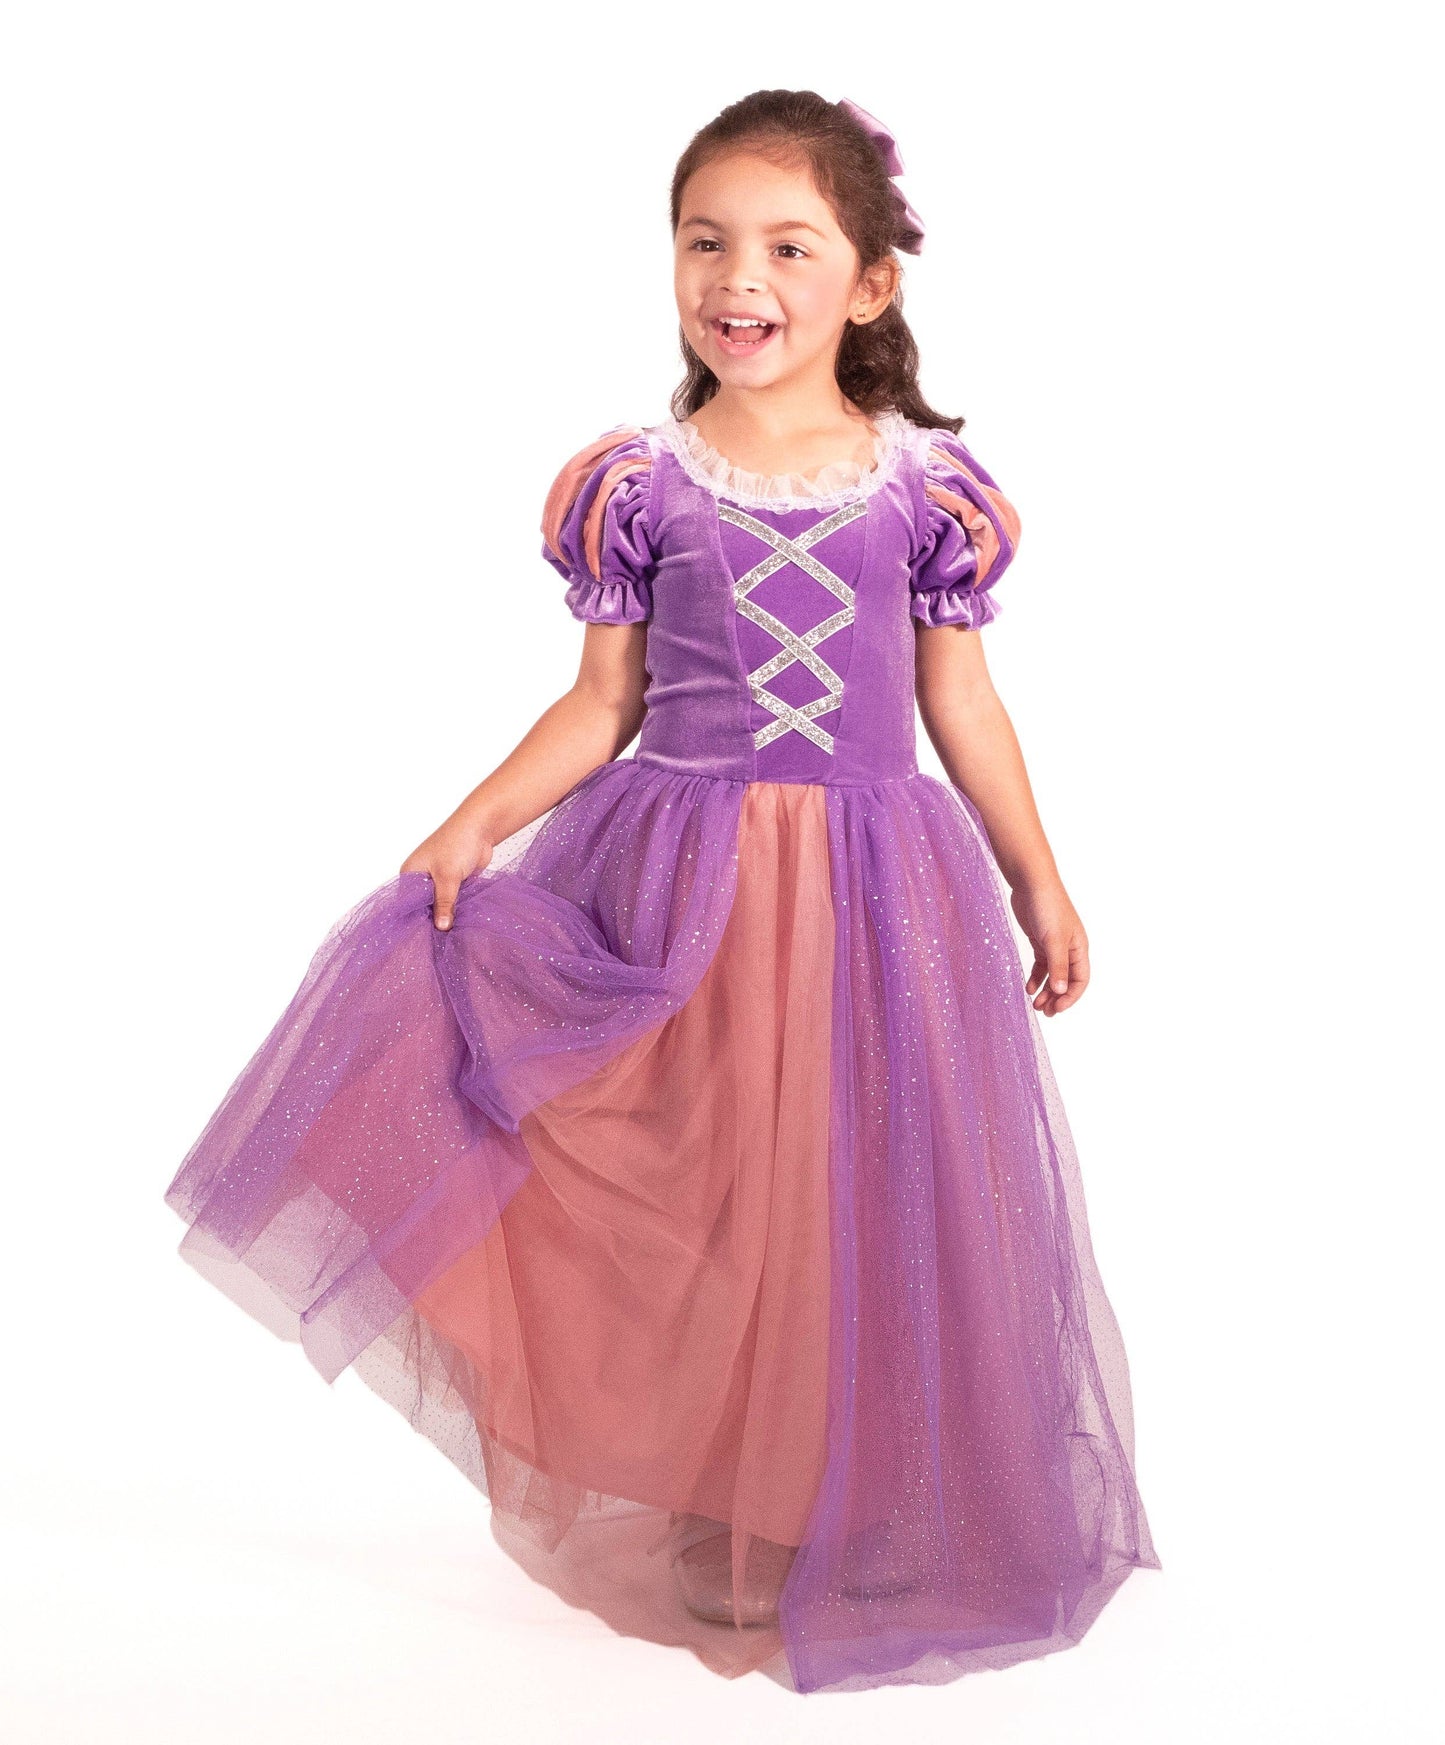 Tower Princess Costume Dress (XS) 2-3 years